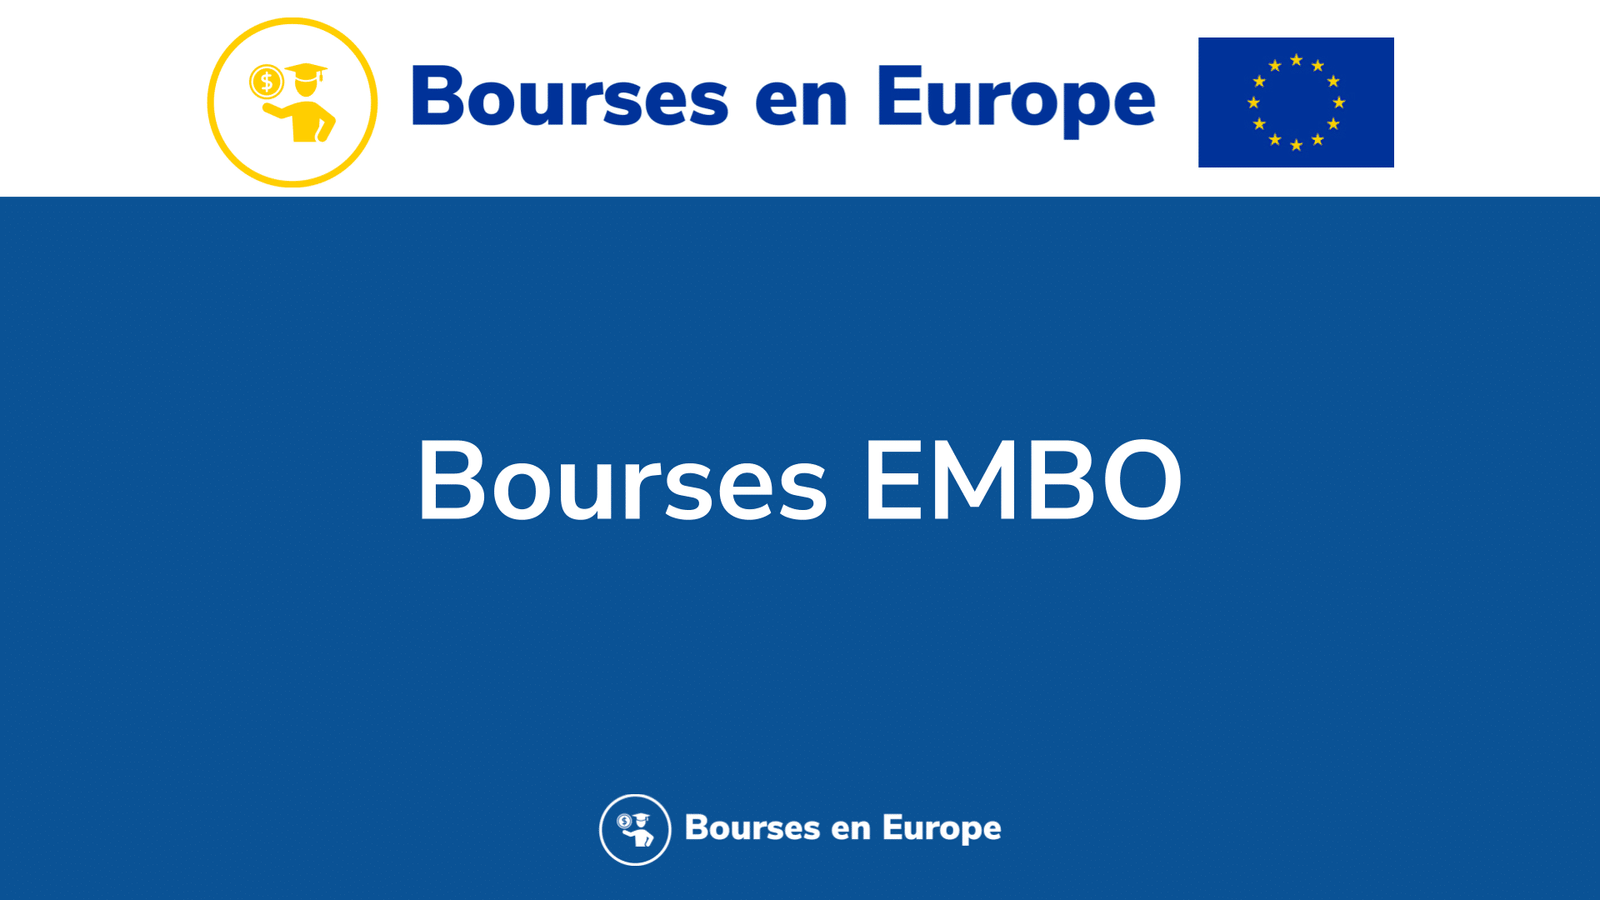 Bourses EMBO